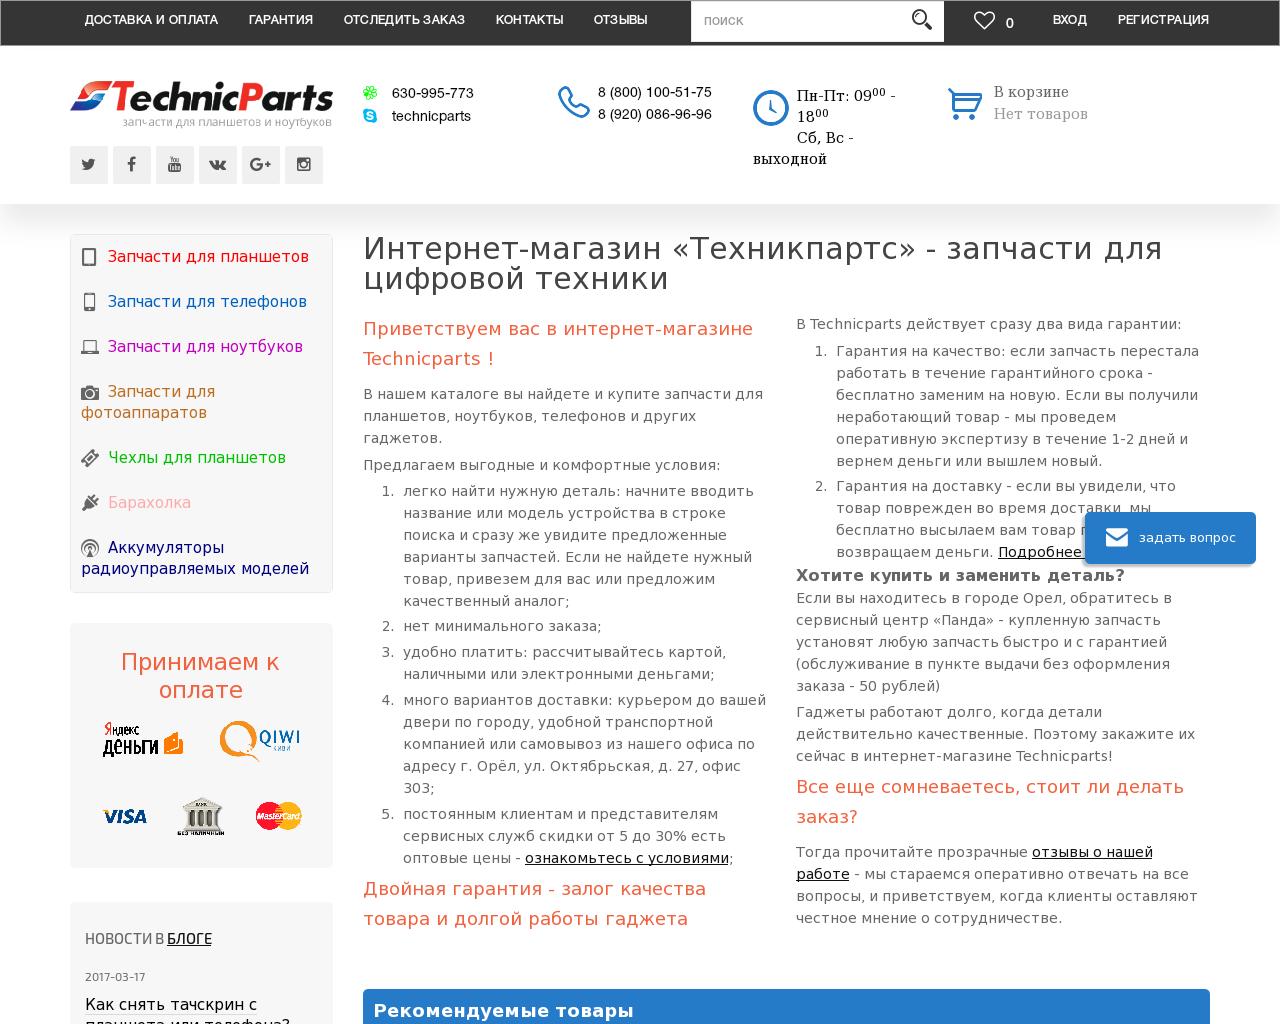 Изображение сайта technicparts.ru в разрешении 1280x1024